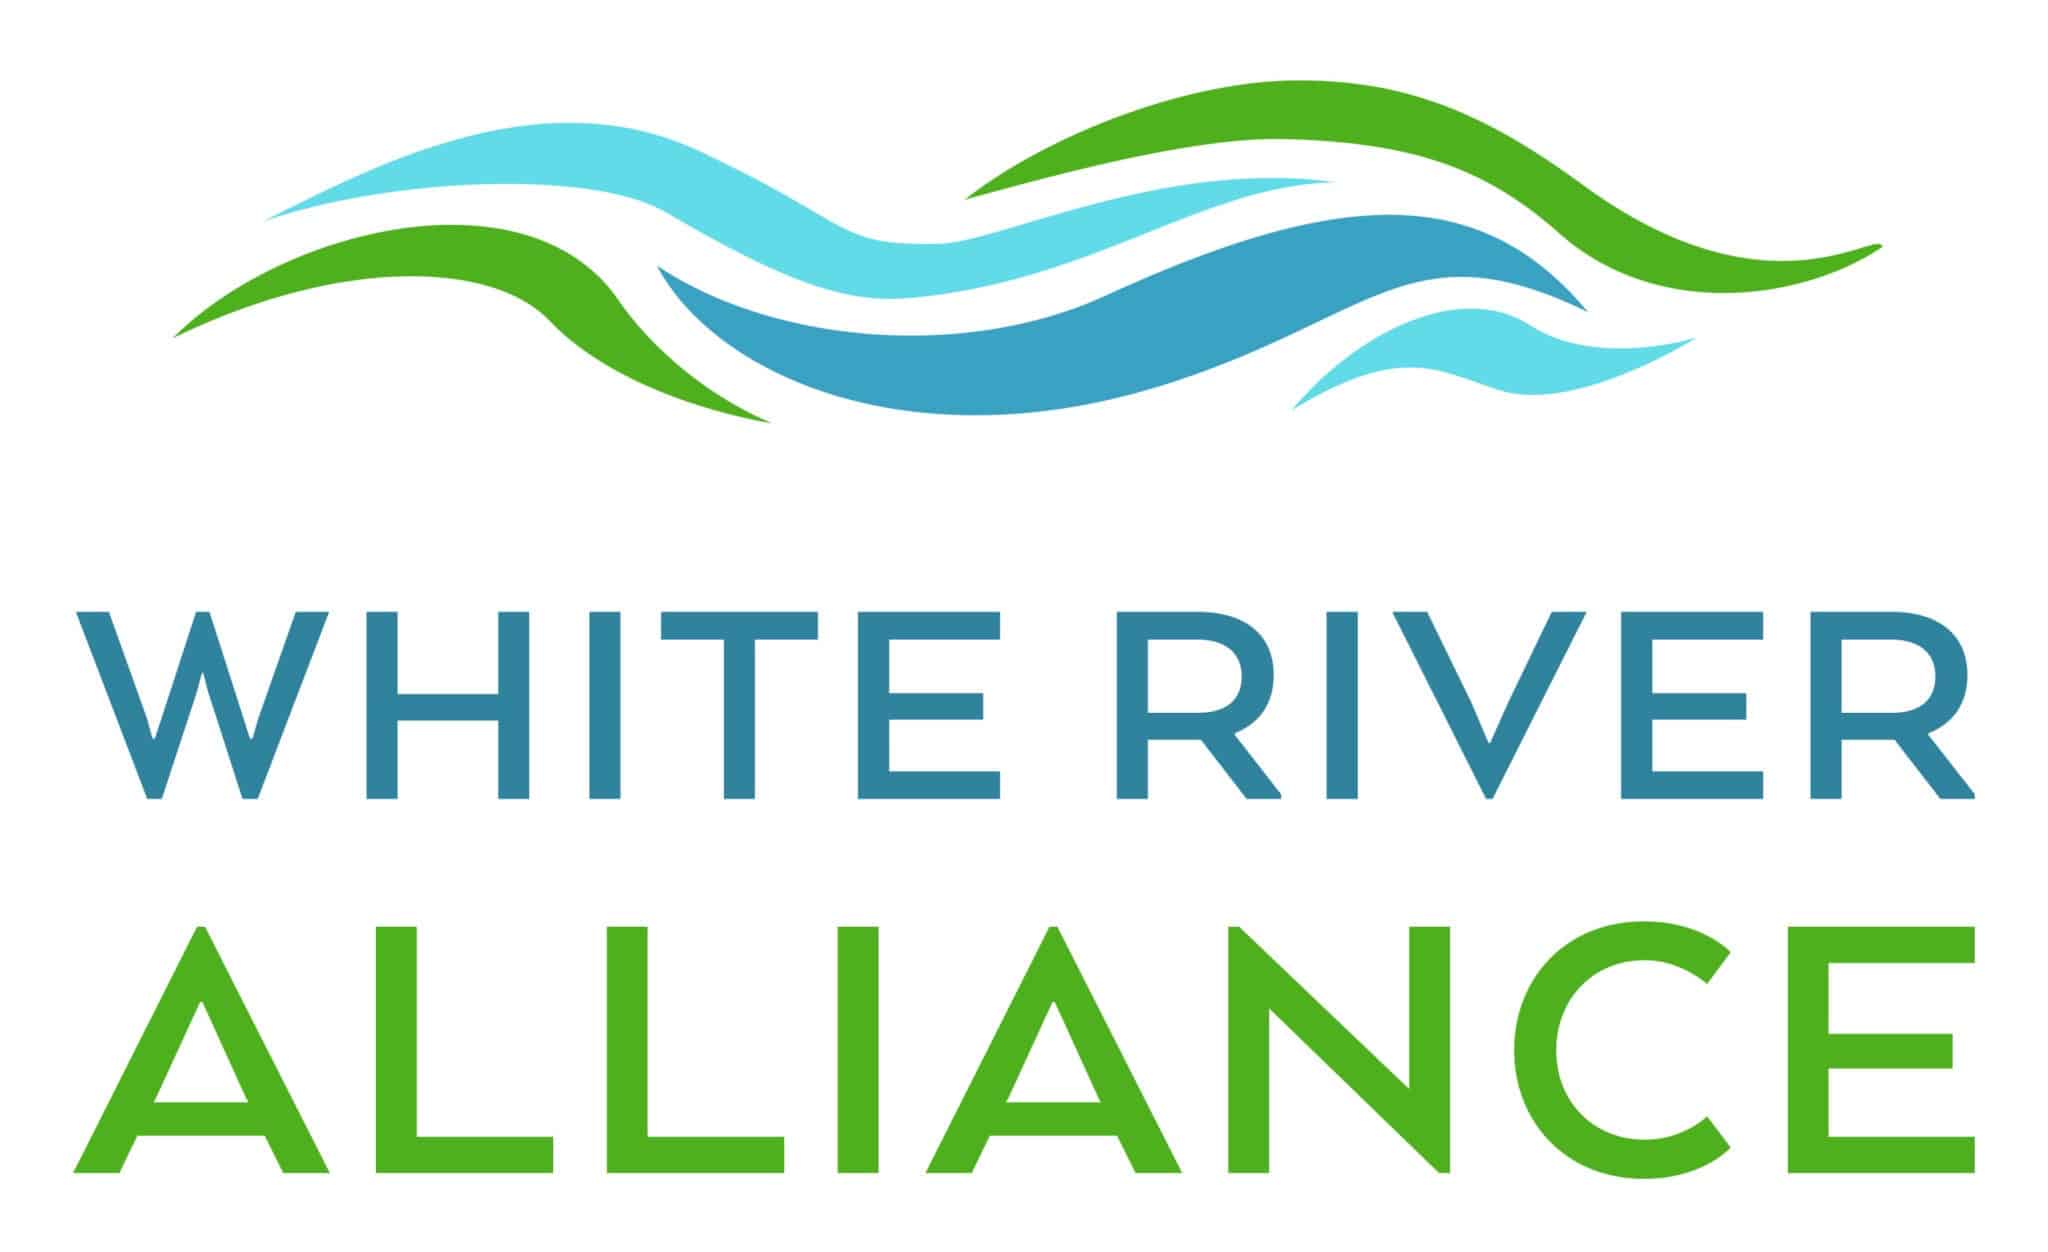 White river alliance logo